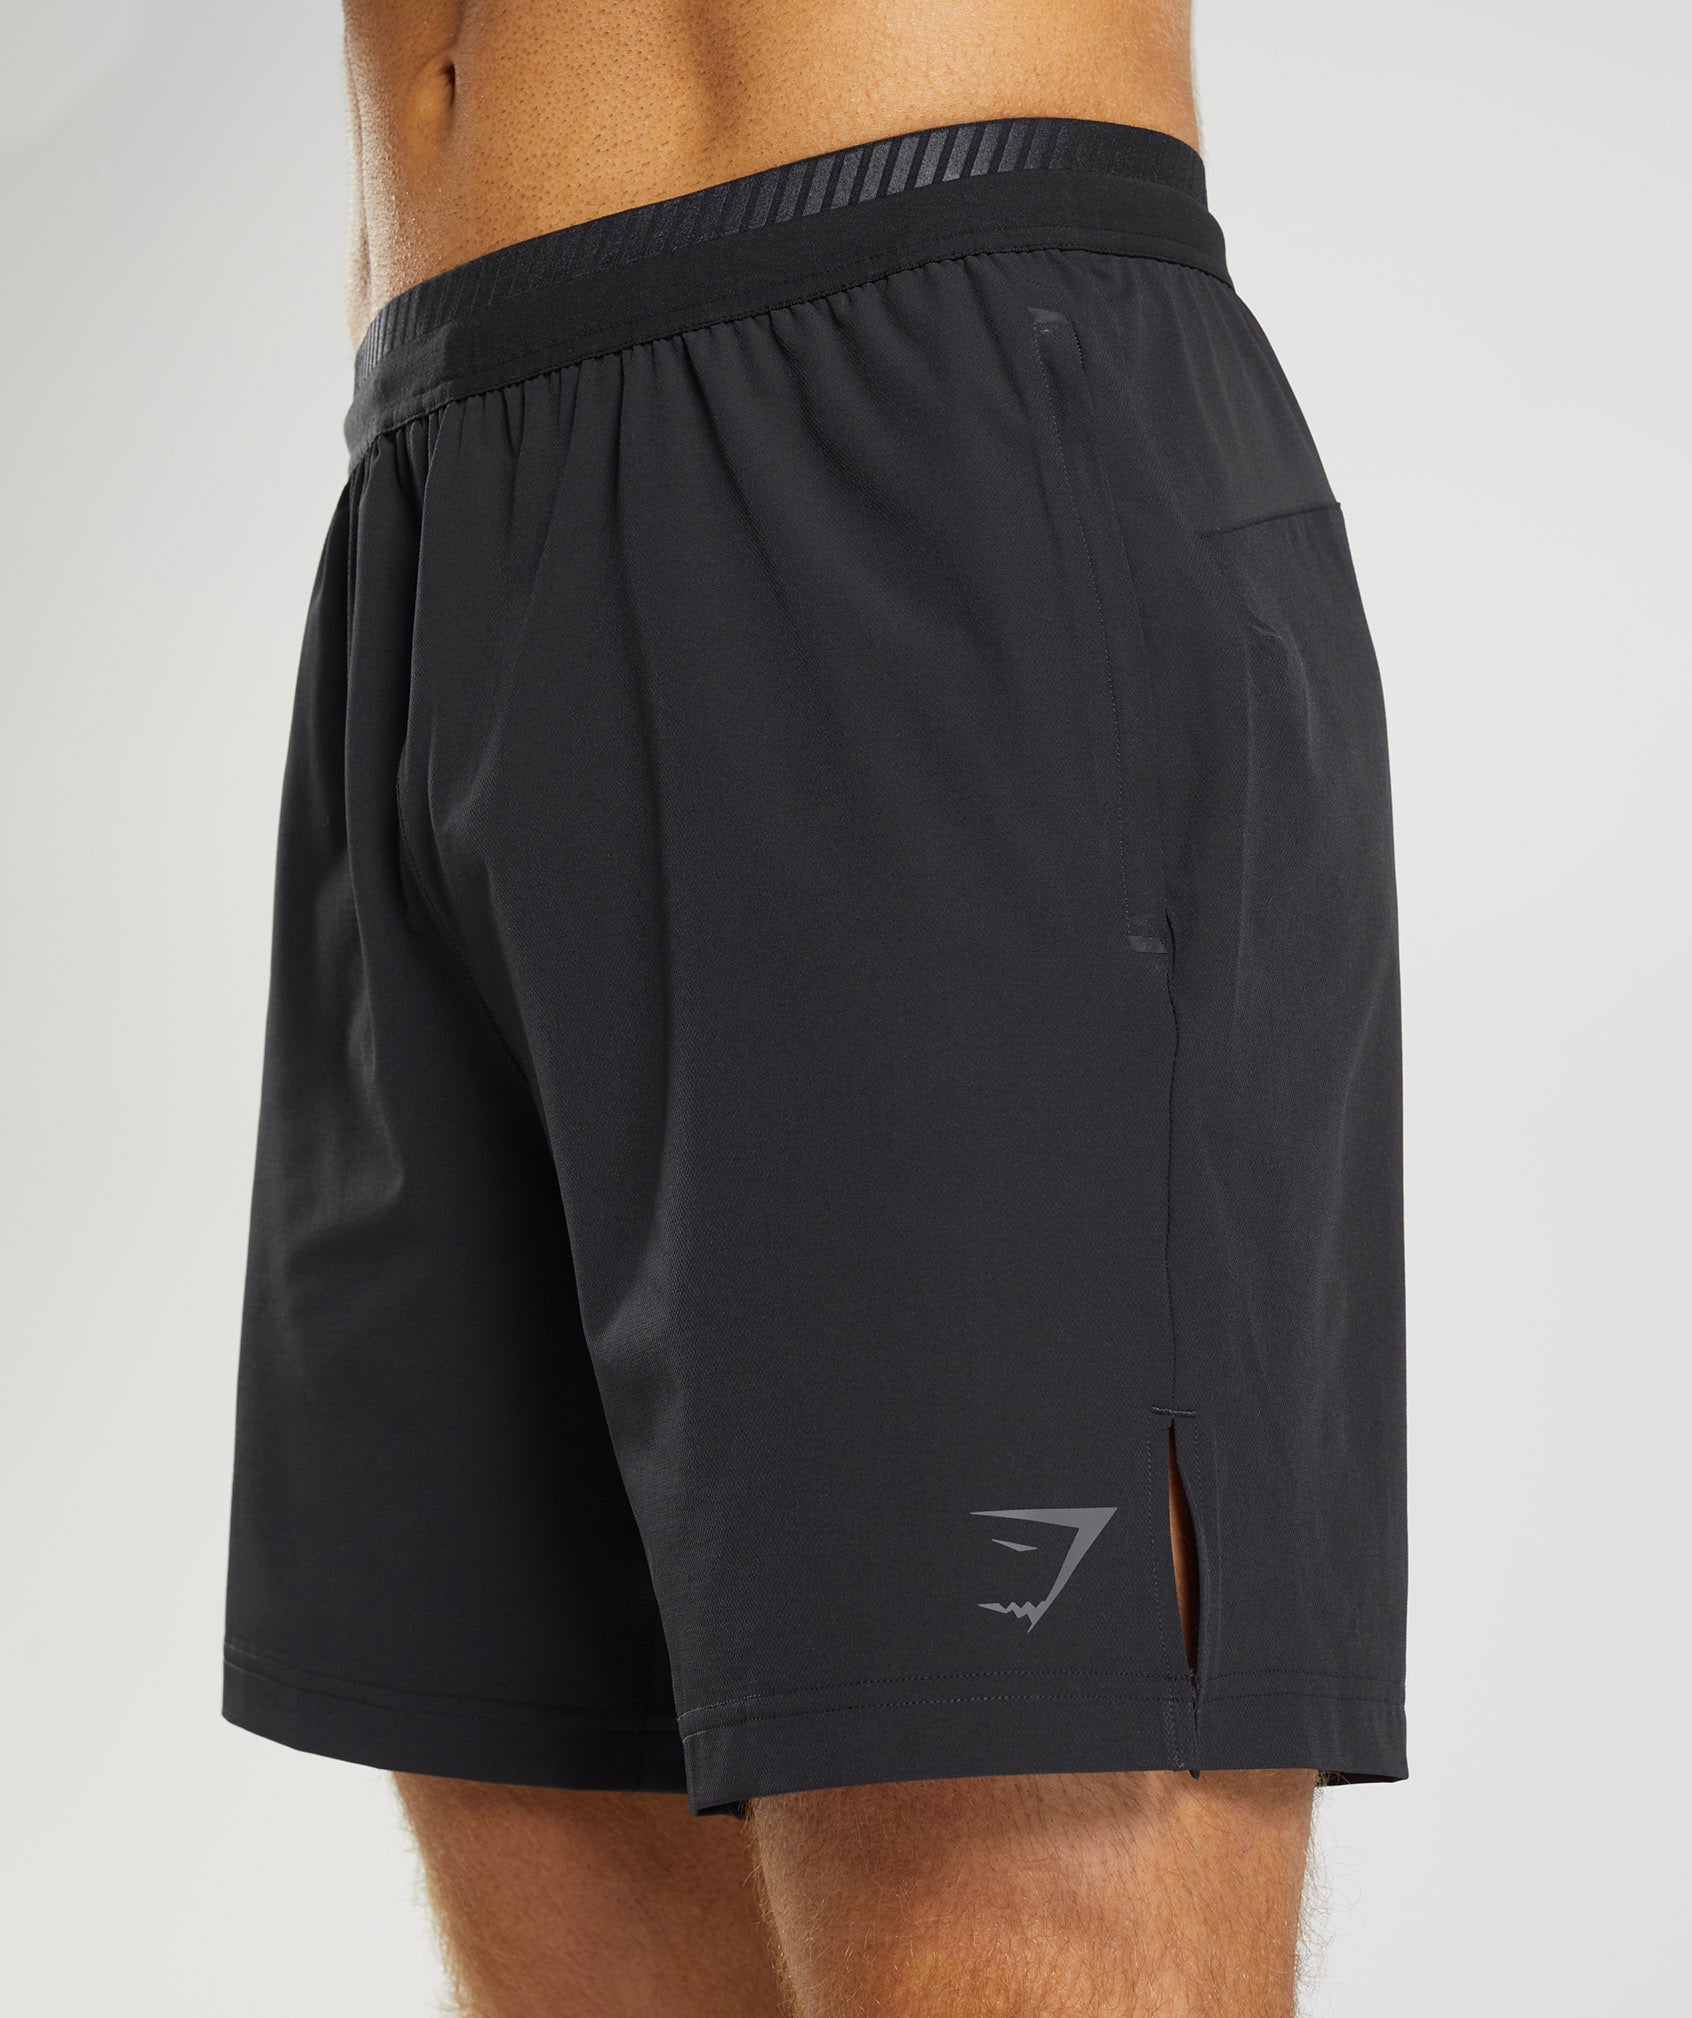 Apex 7" Hybrid Shorts in Black - view 5